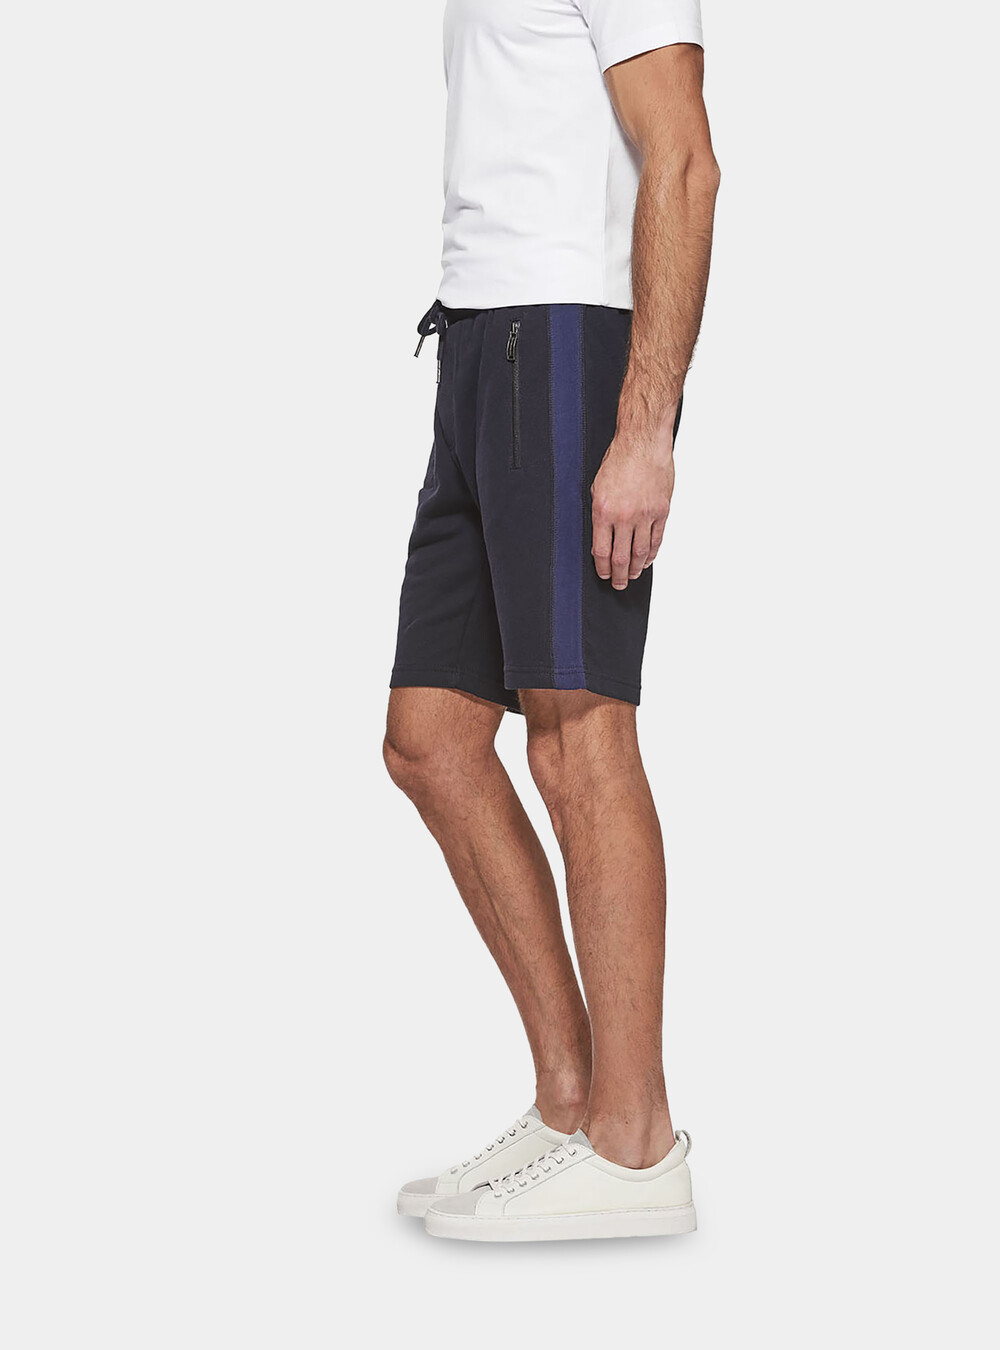 Sweatshirt Bermuda shorts with waterpoof zipper | GutteridgeEU - 92599002